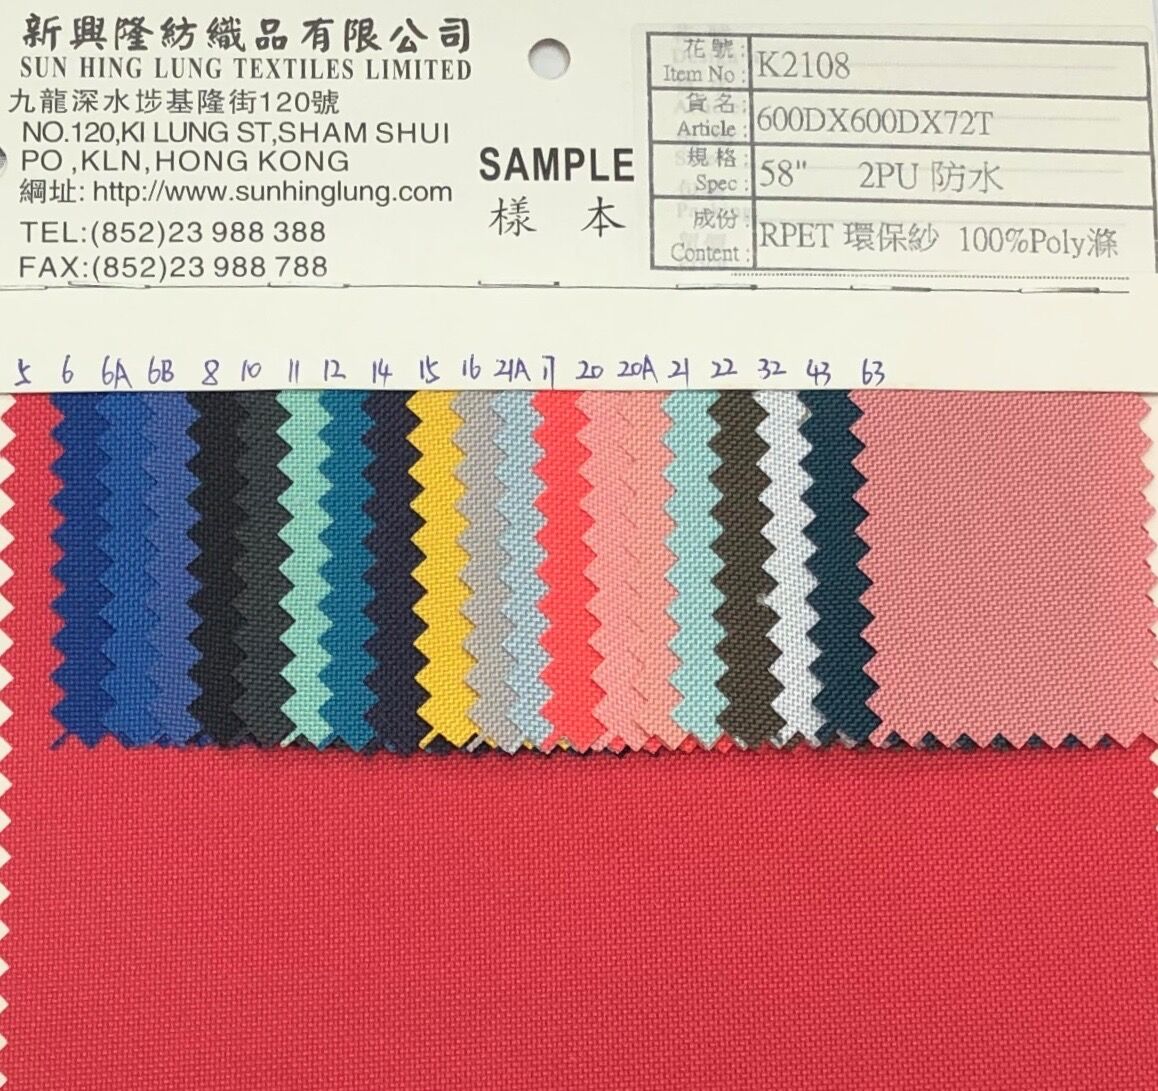 K2108 58" 100% Polyester ( PRET )